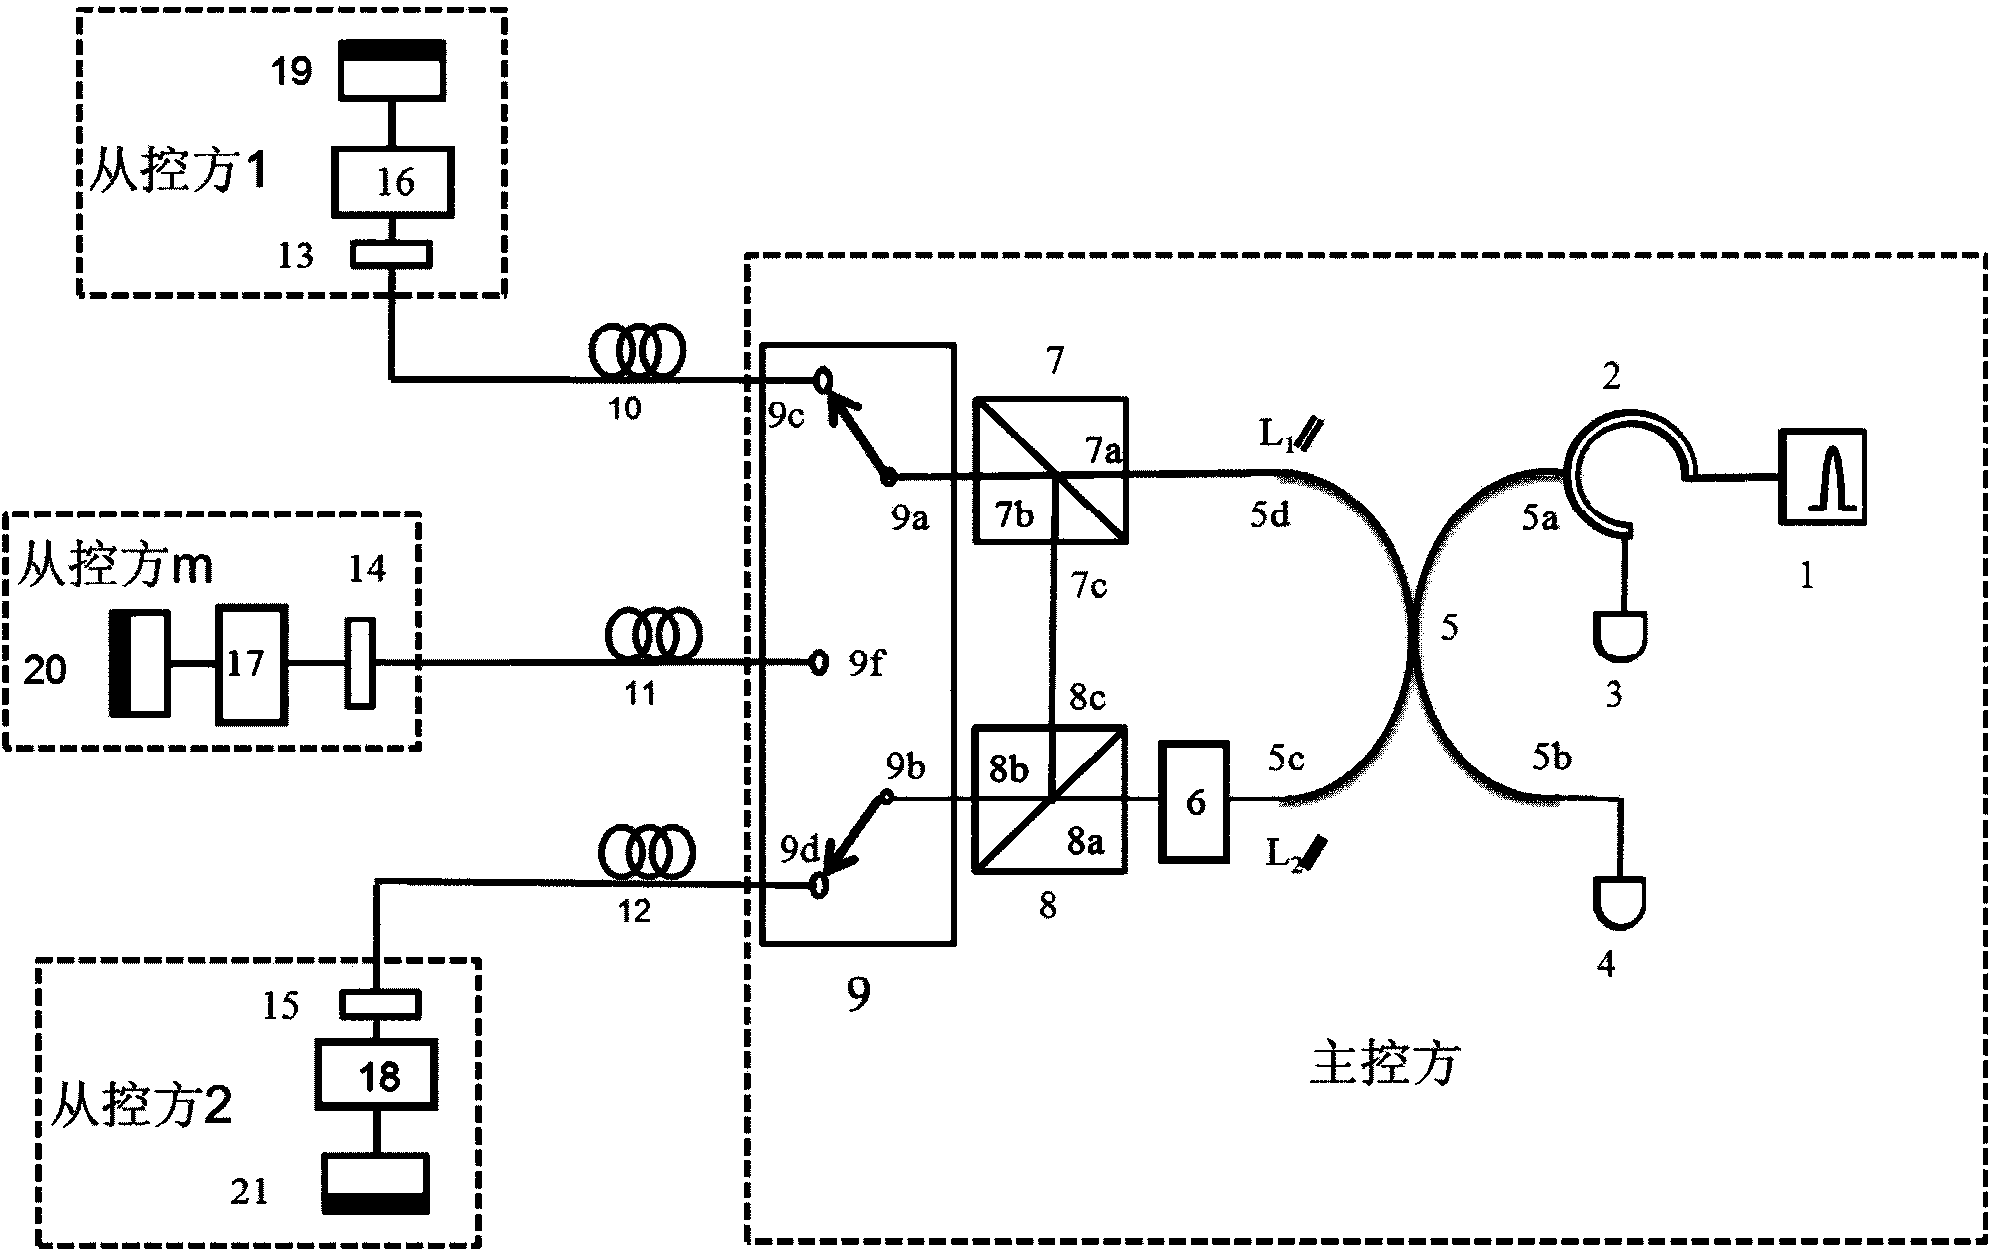 Multi-user quantum key distribution network apparatus